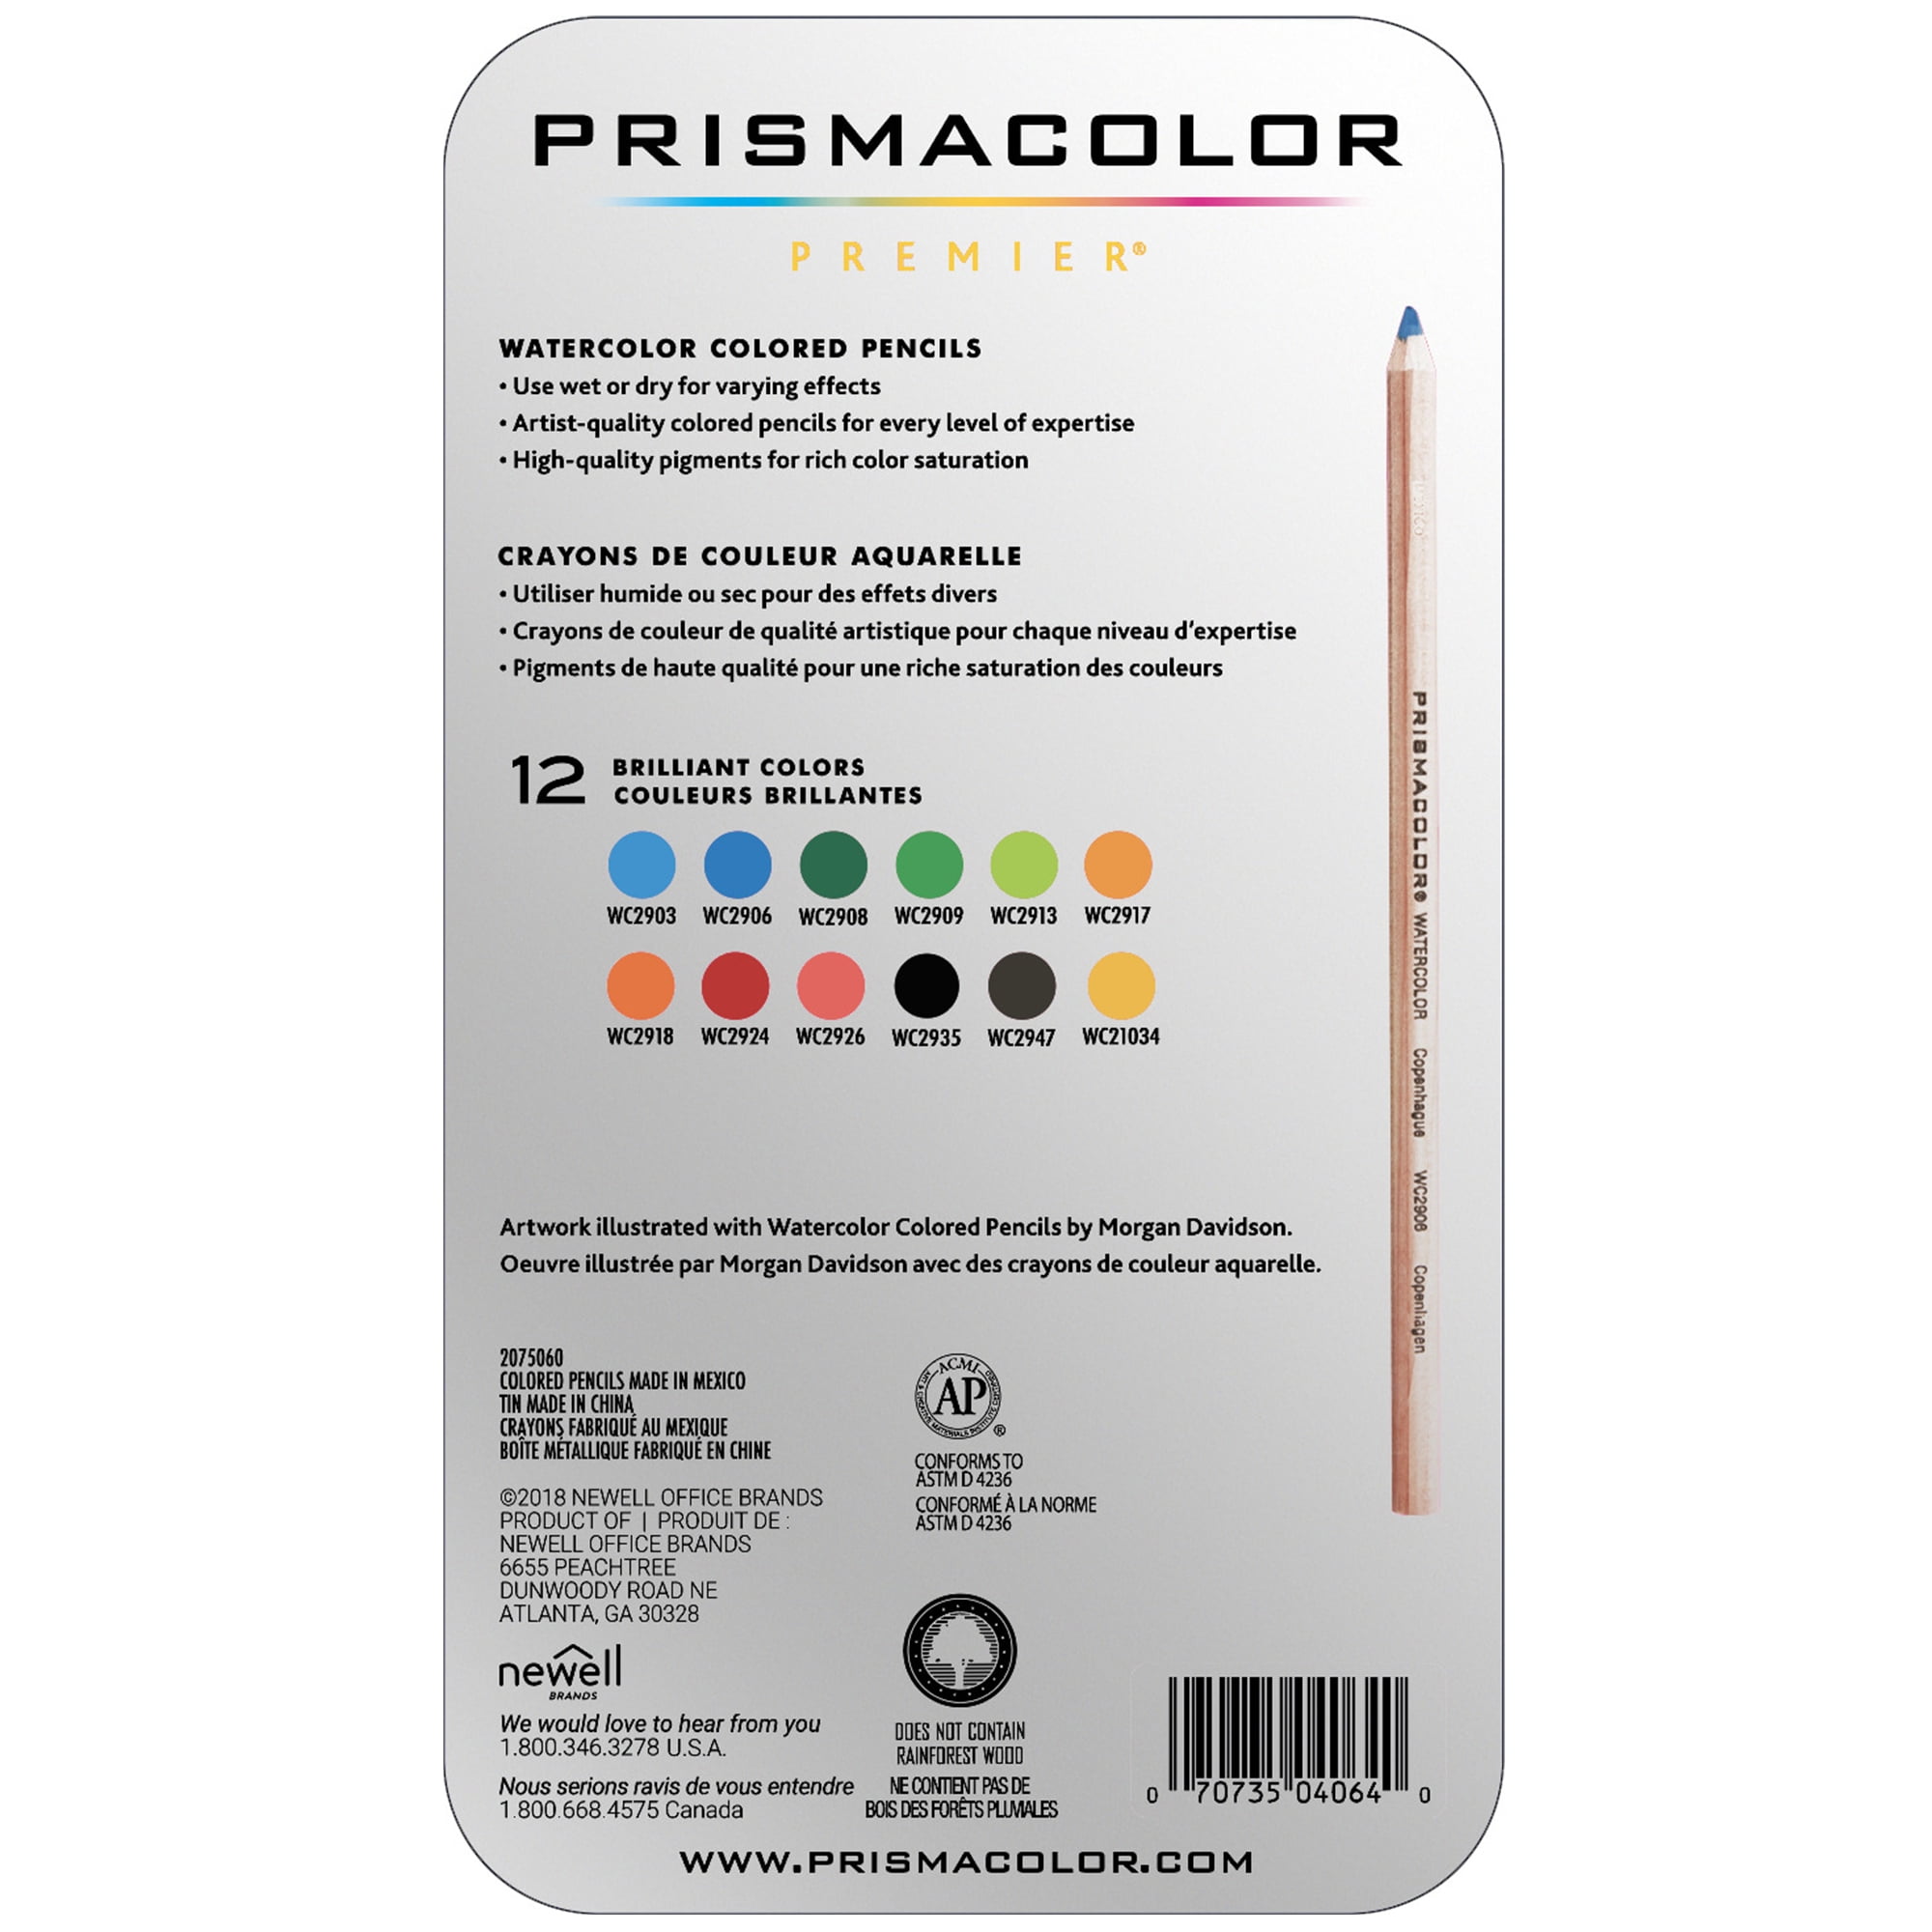 Prismacolor Watercolor Colored Pencils Review